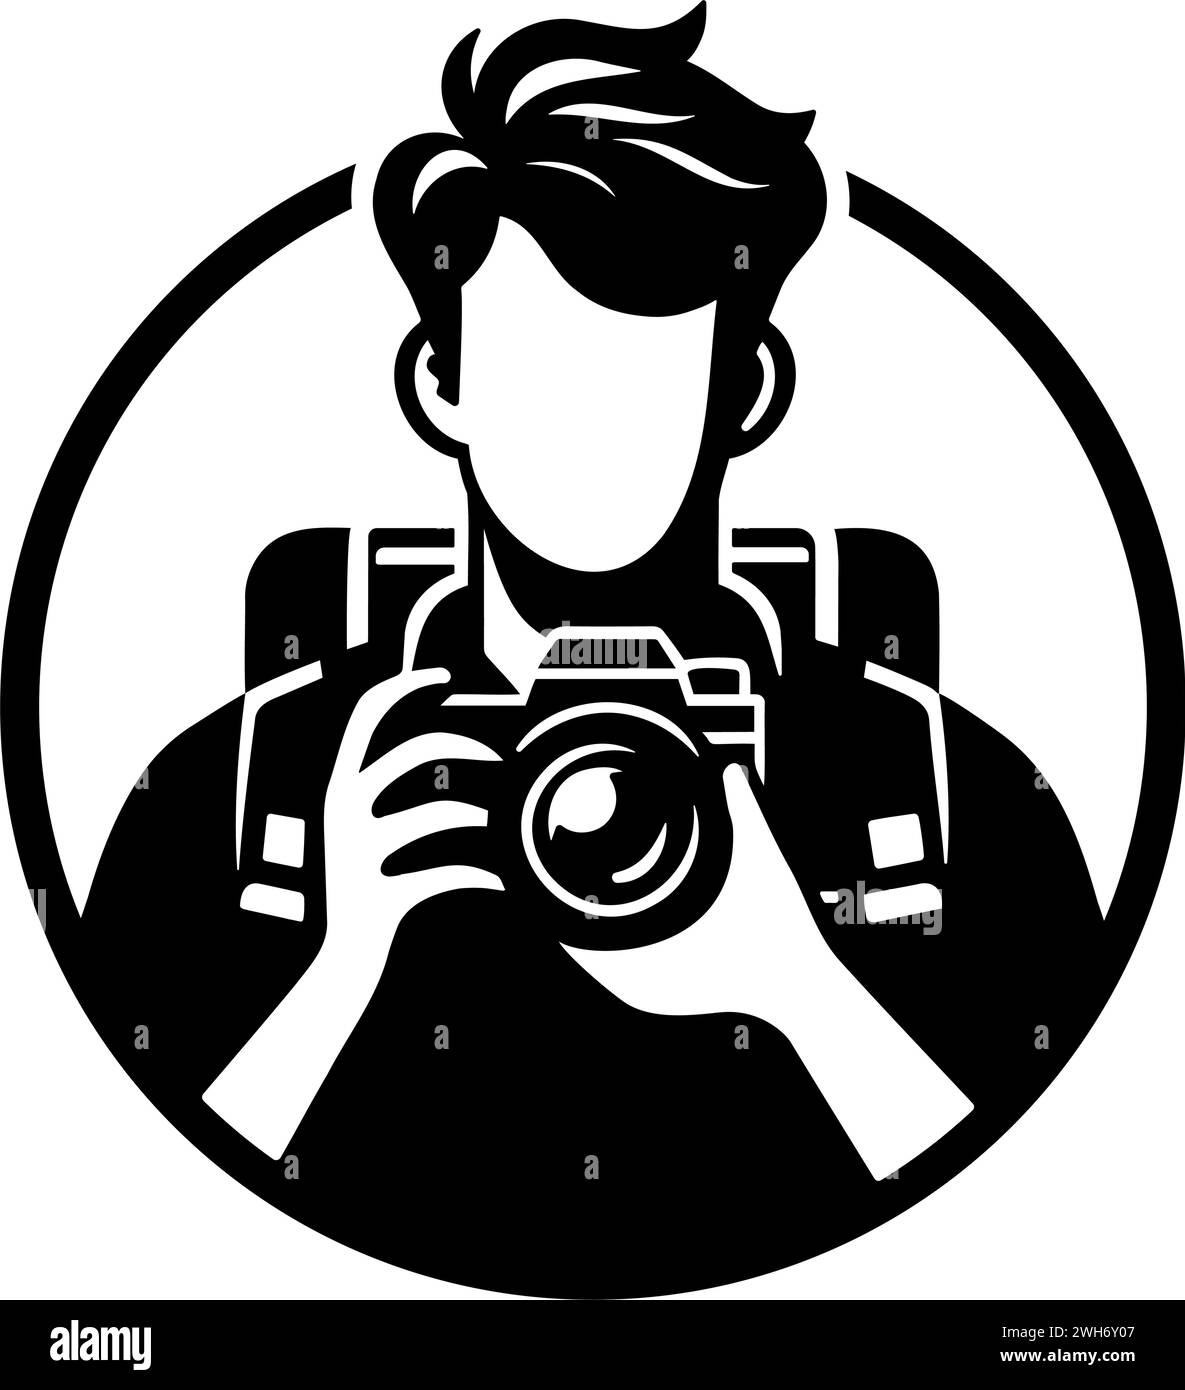 Cameraman photographer Black and White Stock Photos & Images - Alamy